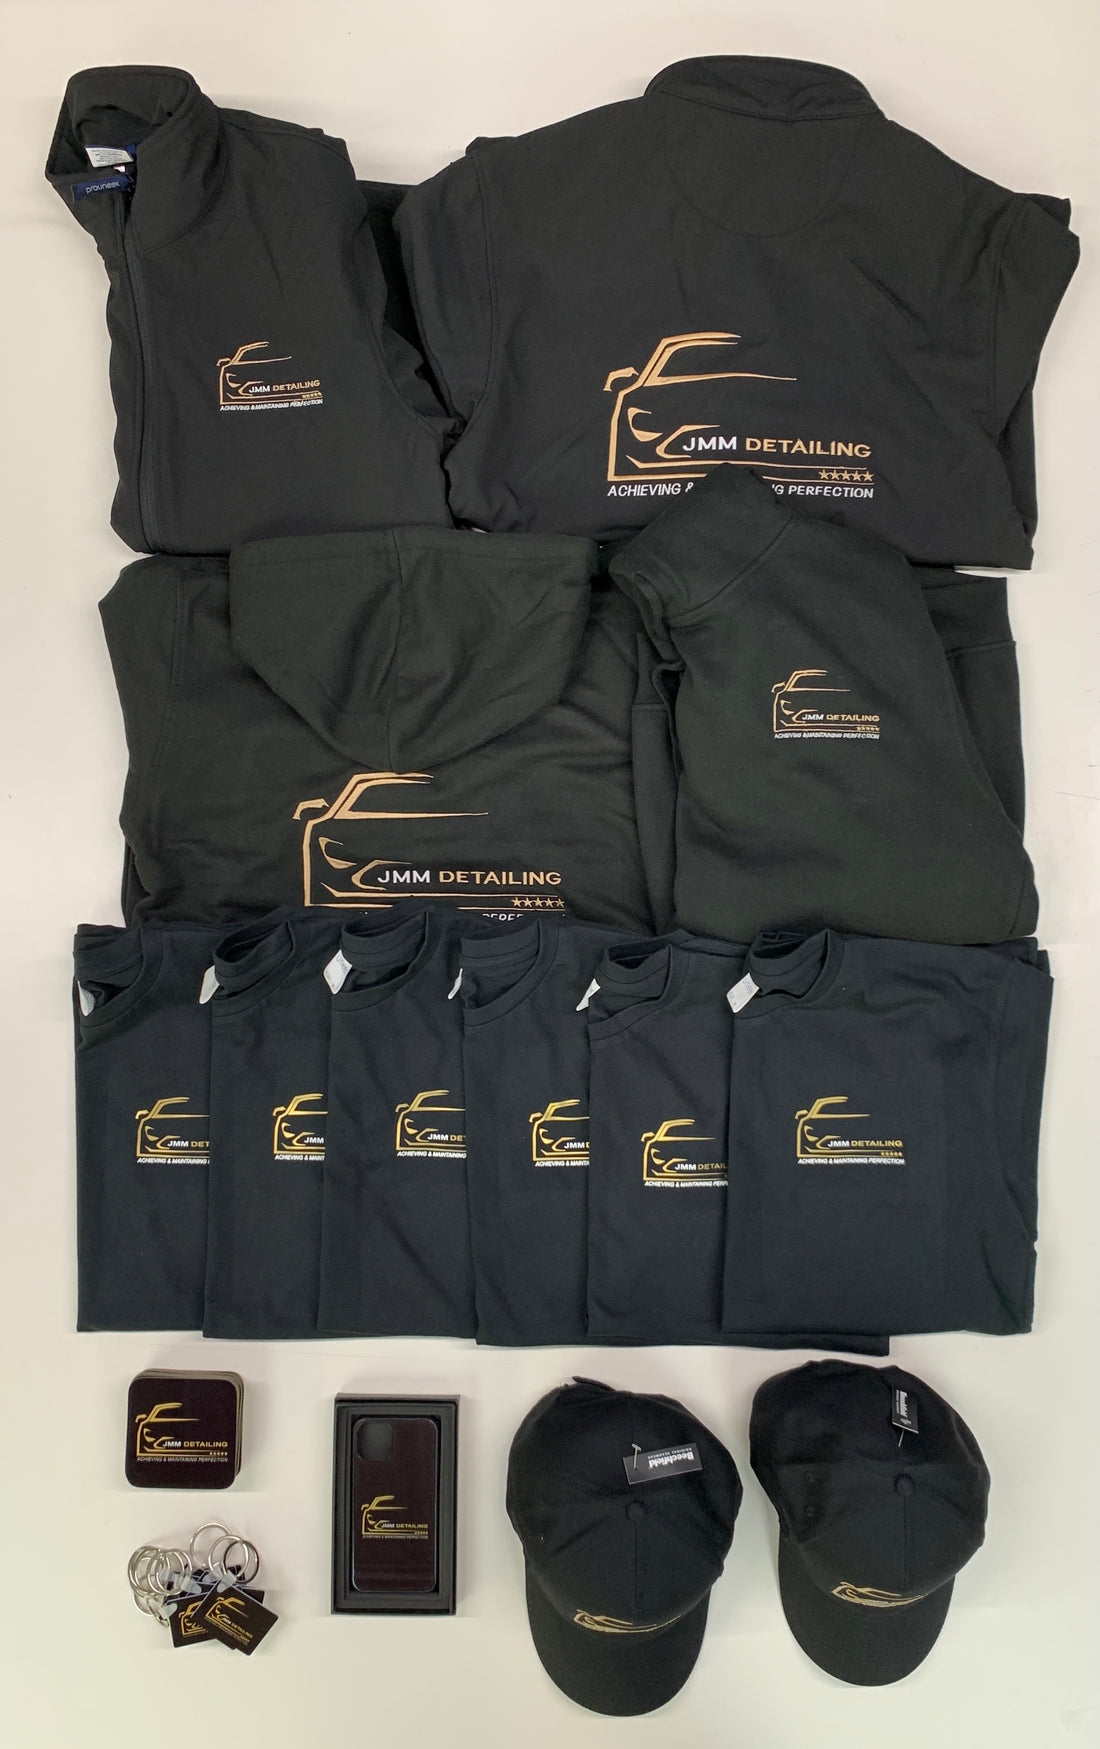 Branded team uniform collection